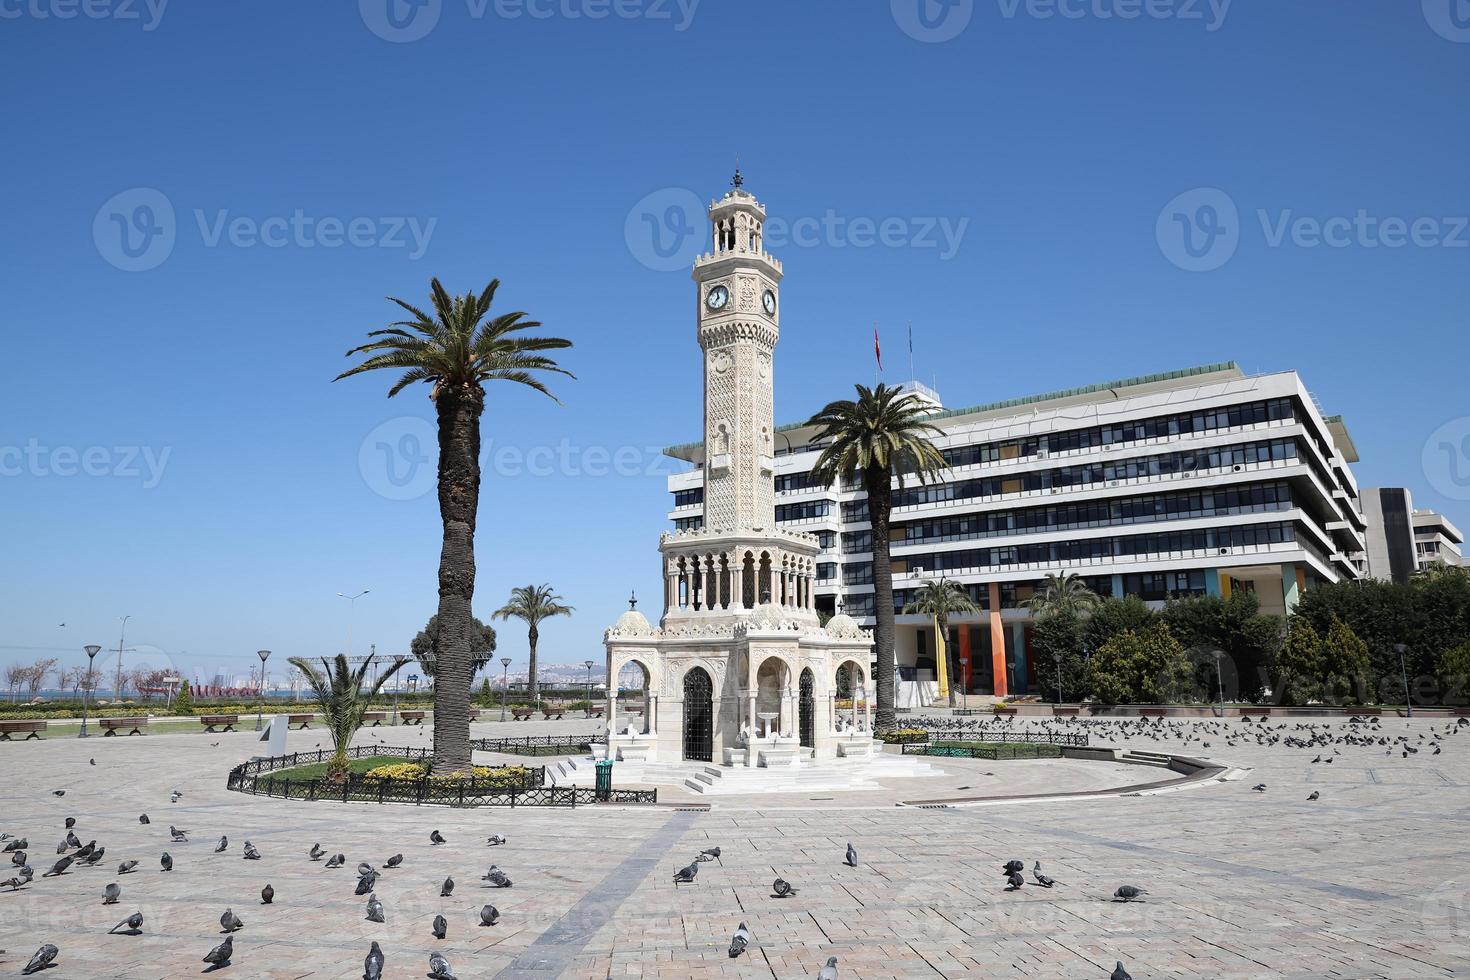 Izmir Clock Tower in Izmir, Turkey photo